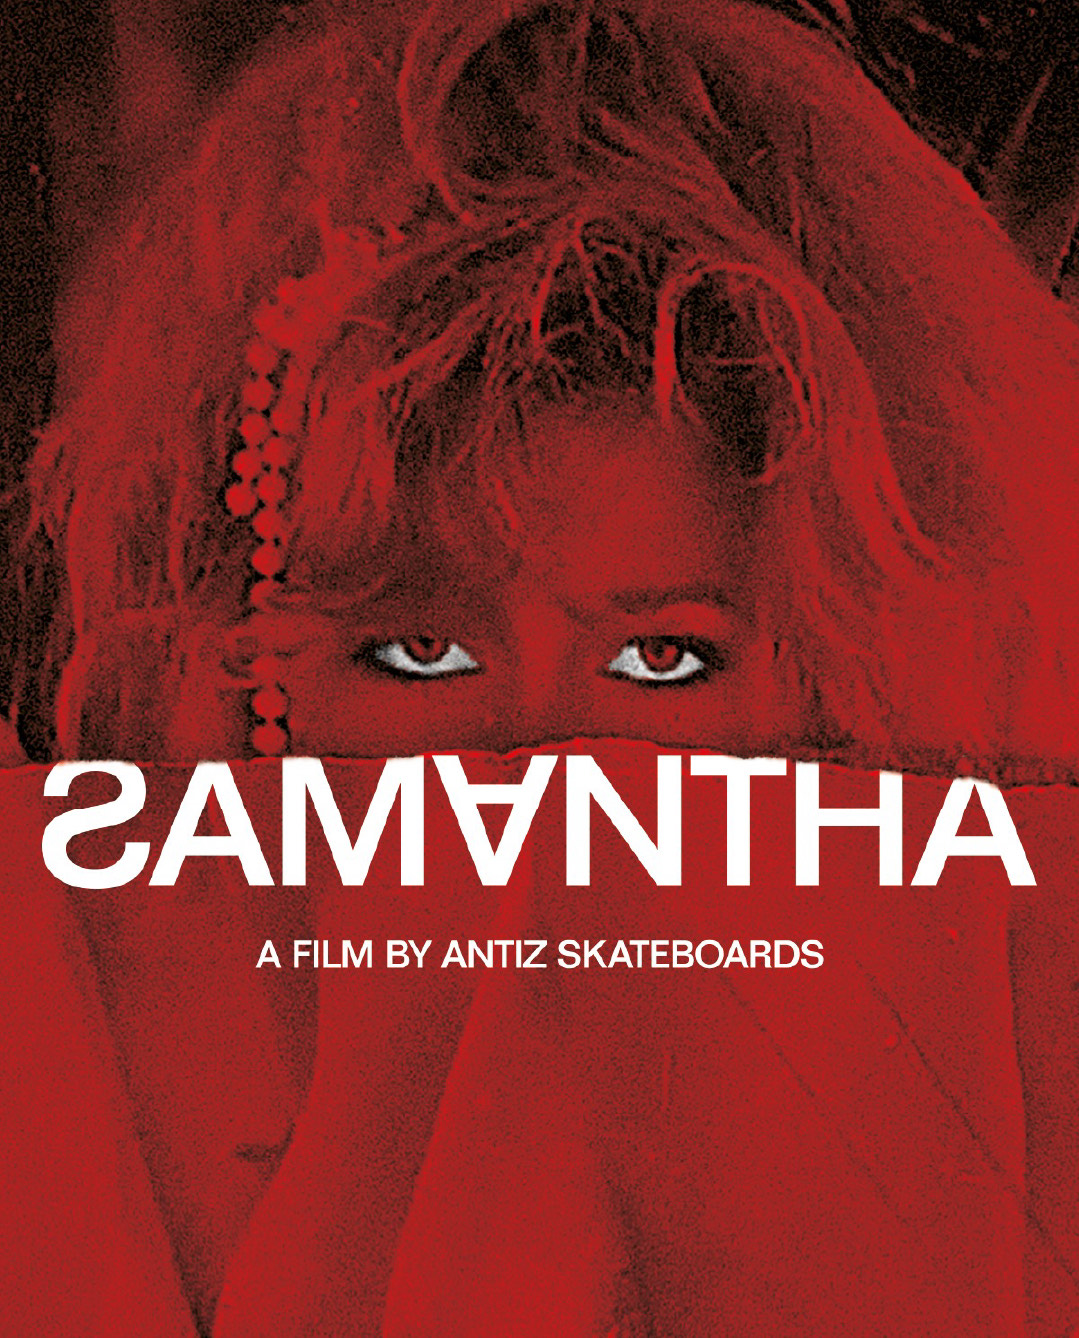 Samantha a film by Antiz skateboards